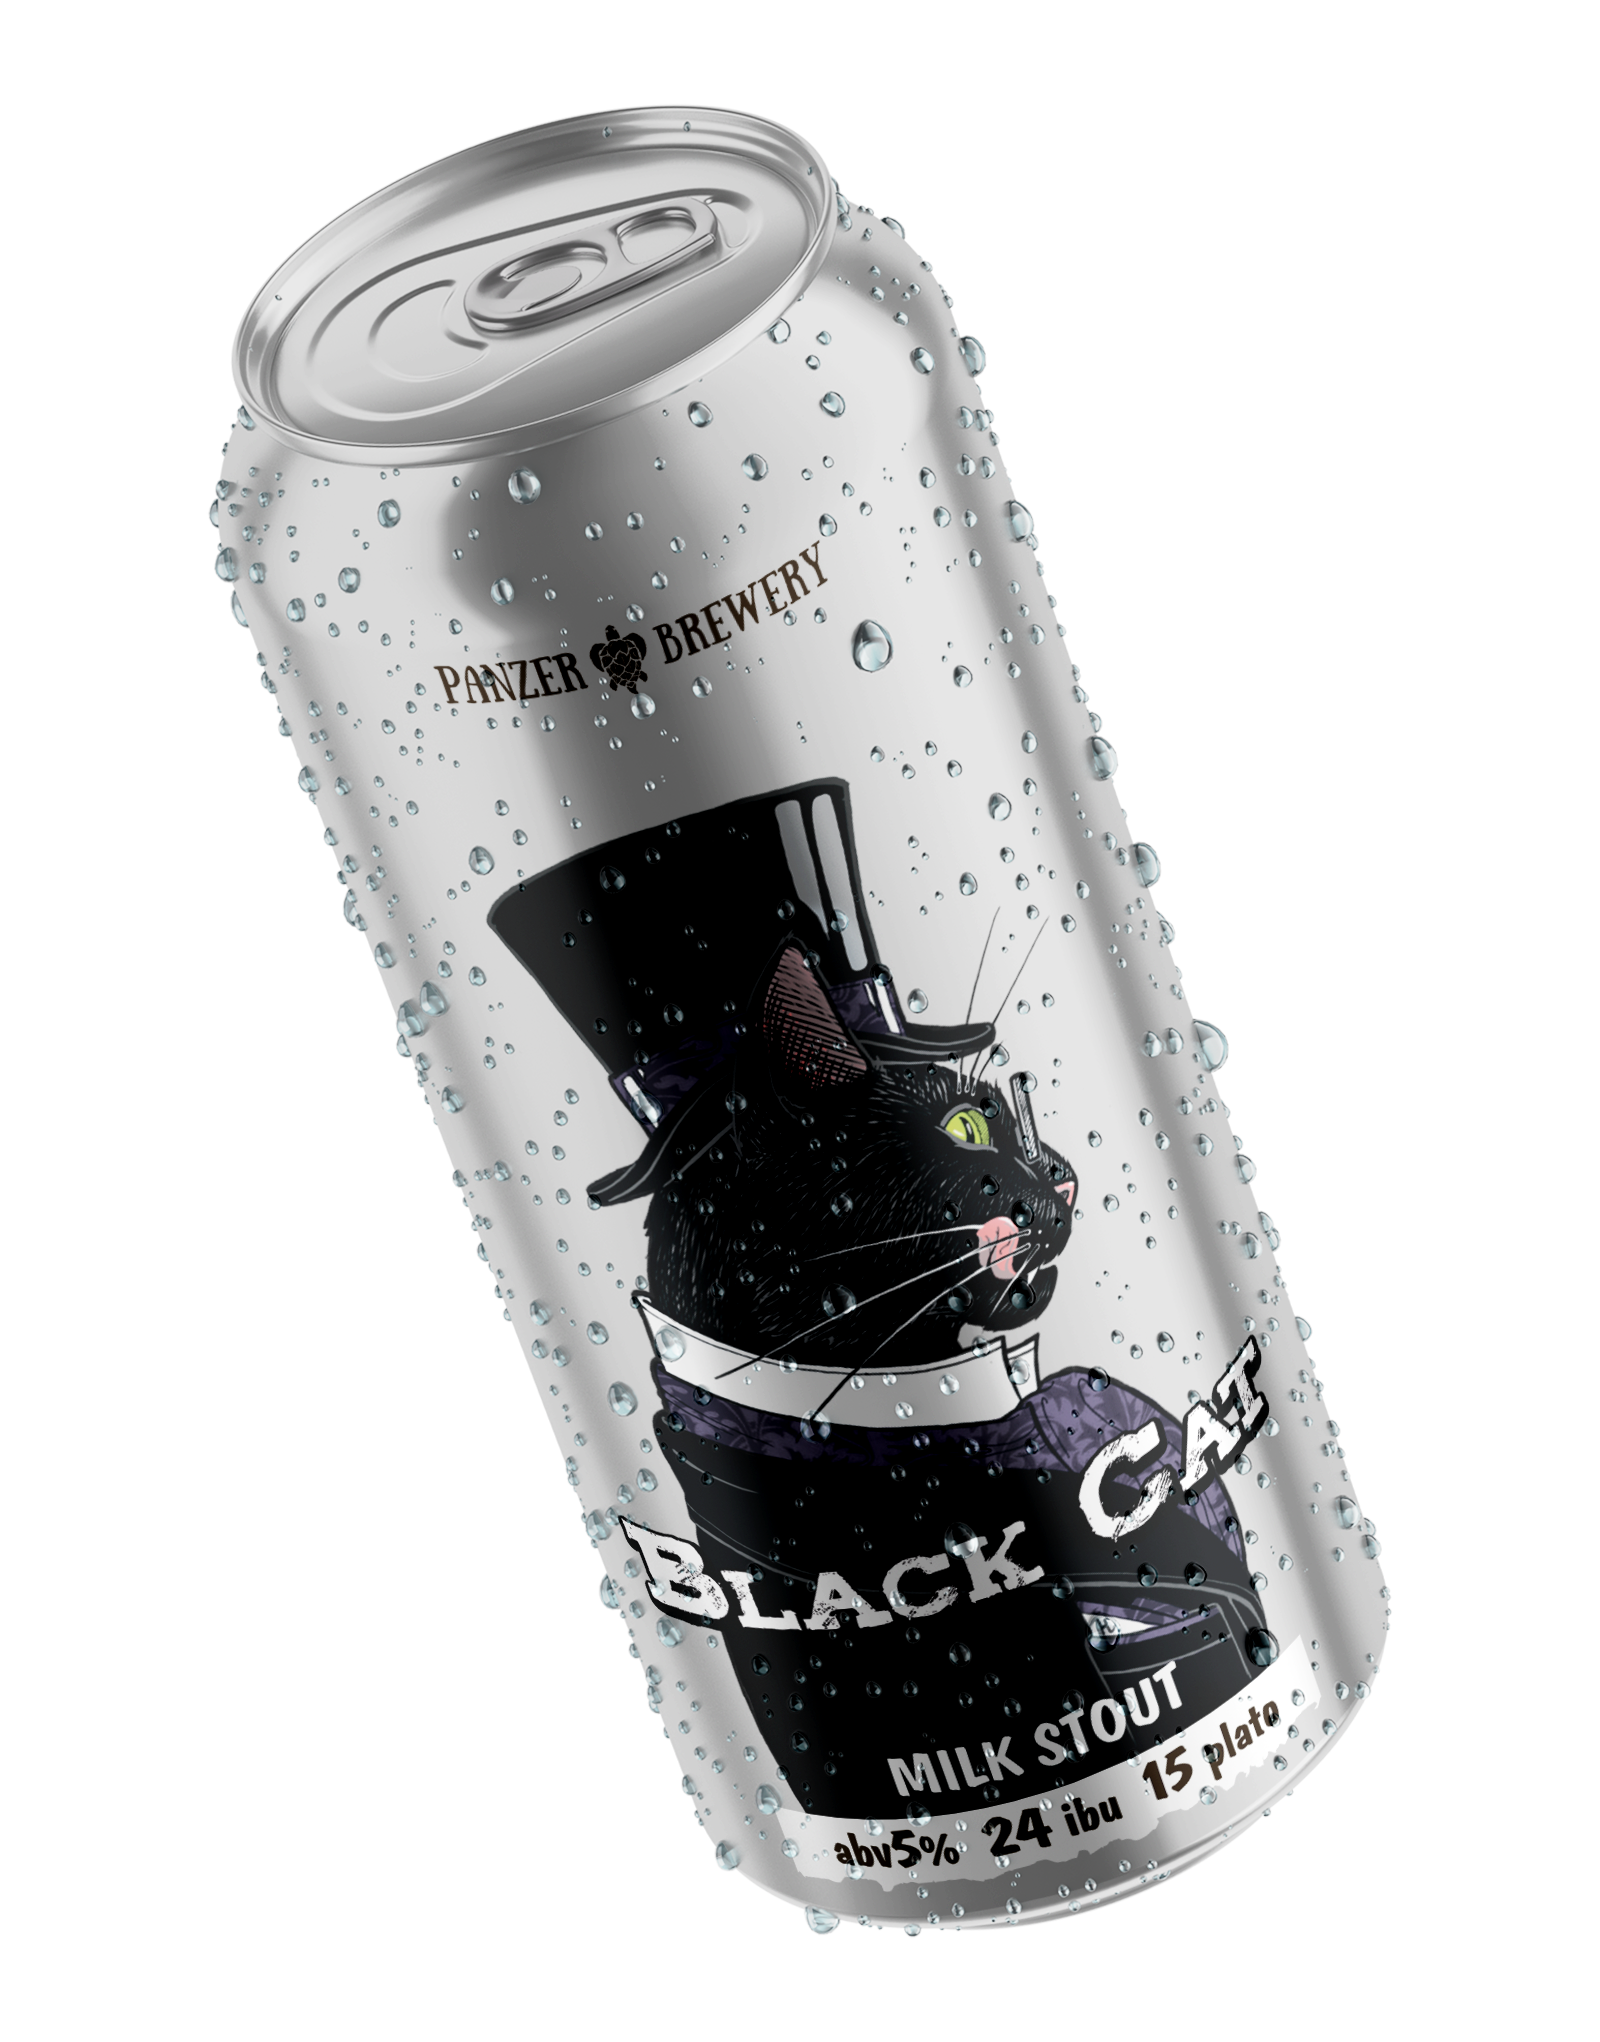 Банка пива Black Cat - Milk Stout от Panzer Brewery